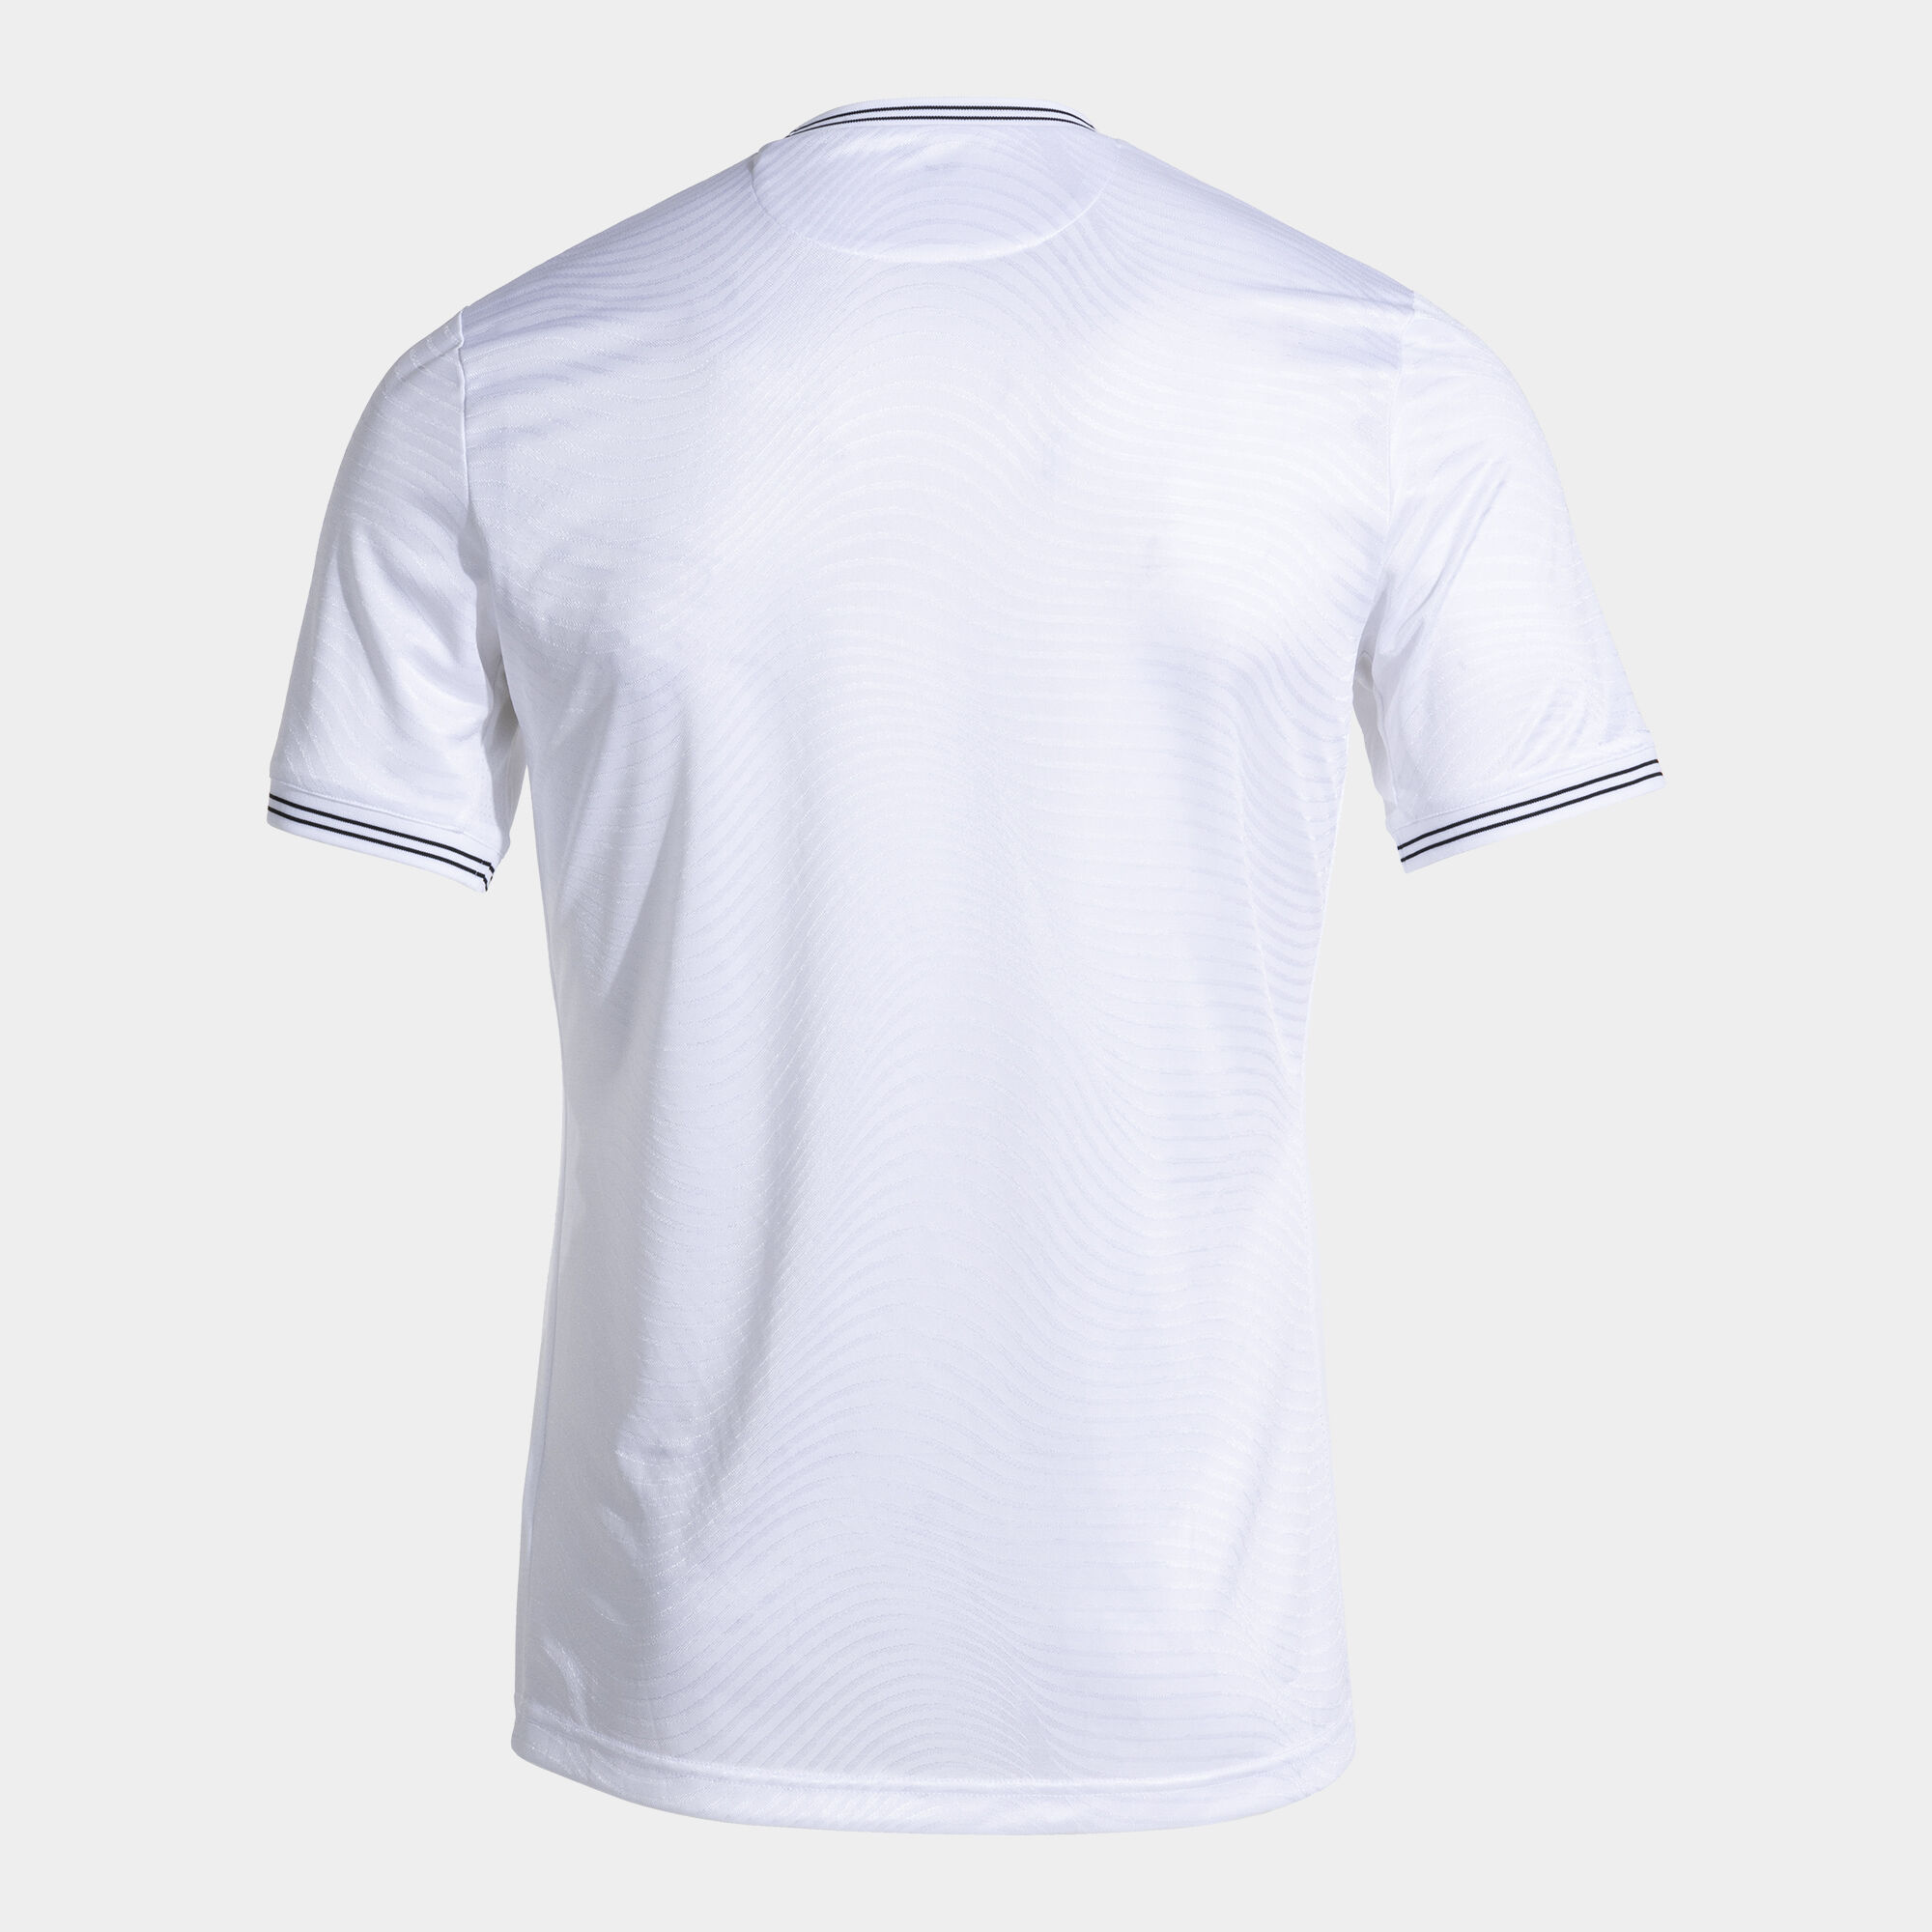 Camiseta manga corta hombre Toletum V blanco